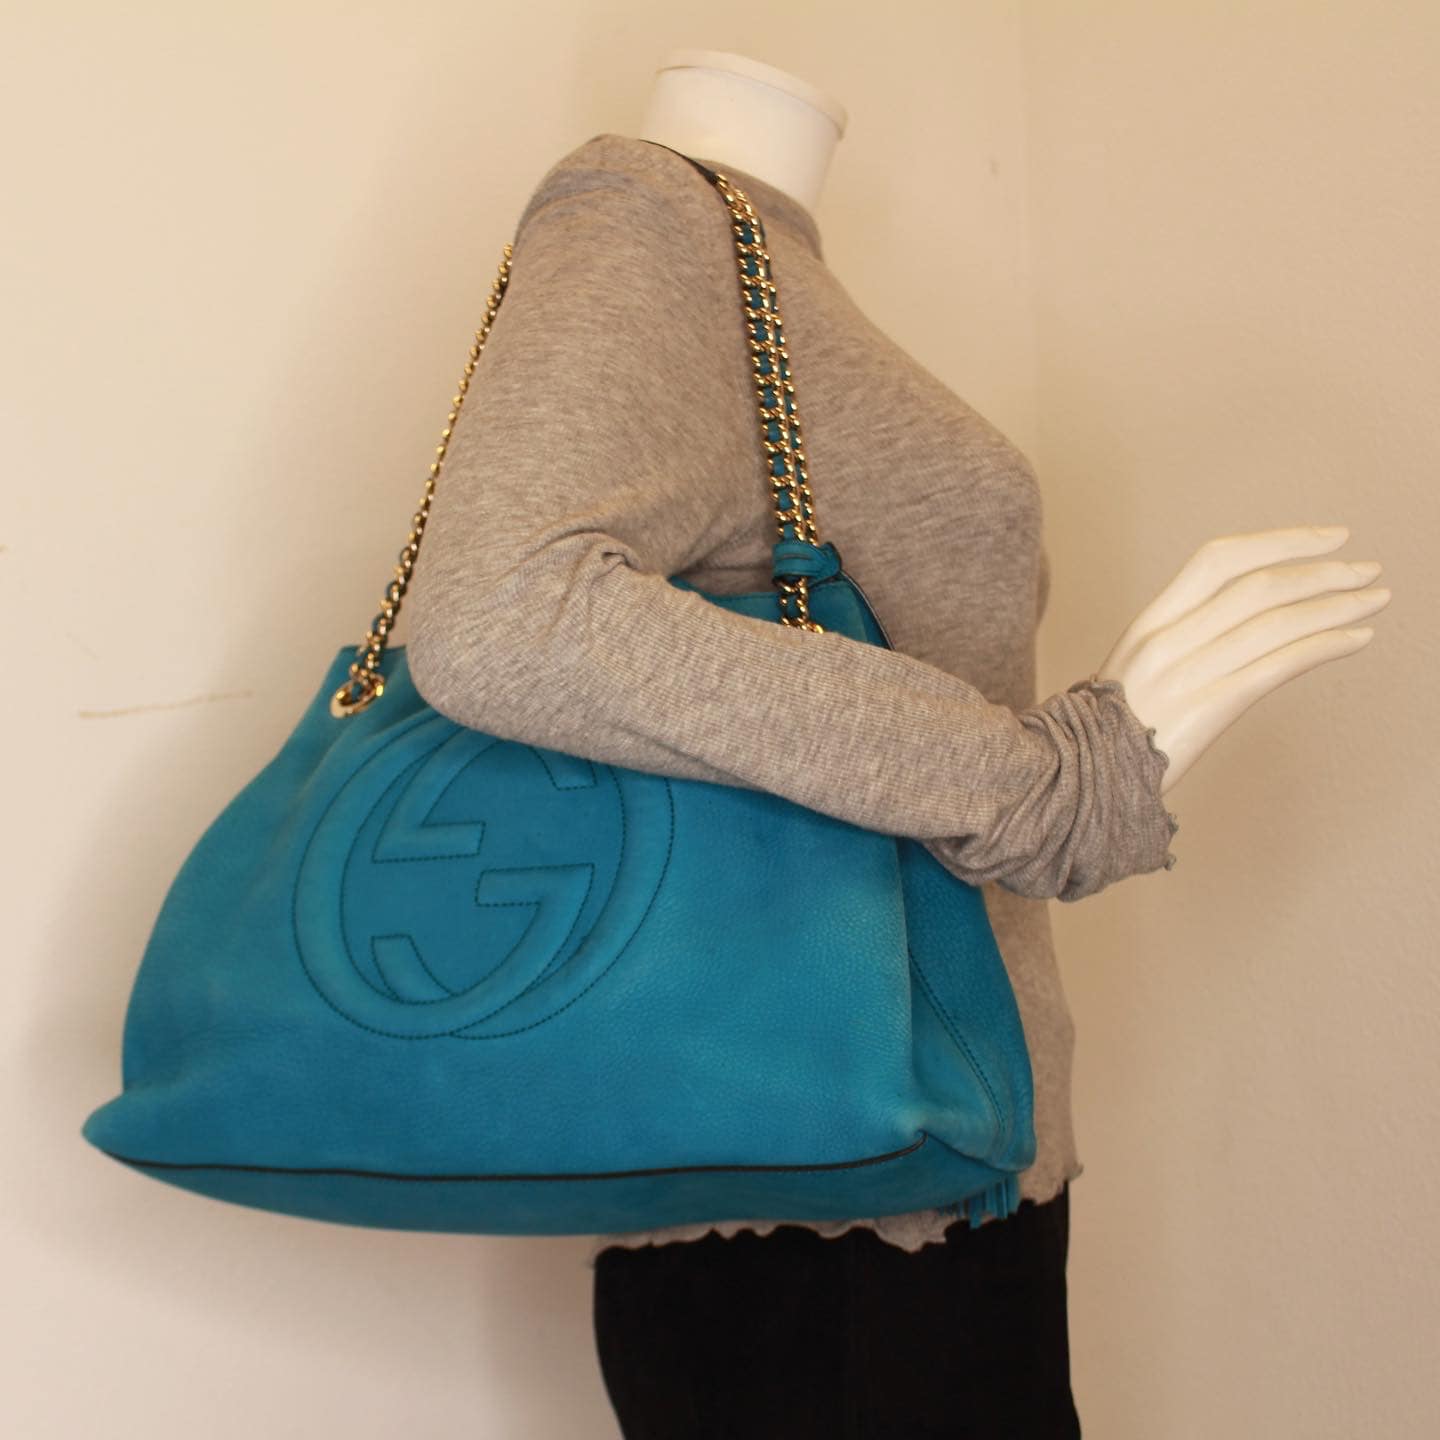 GUCCI 36715 Soho Turquoise Leather Shoulder Bag j